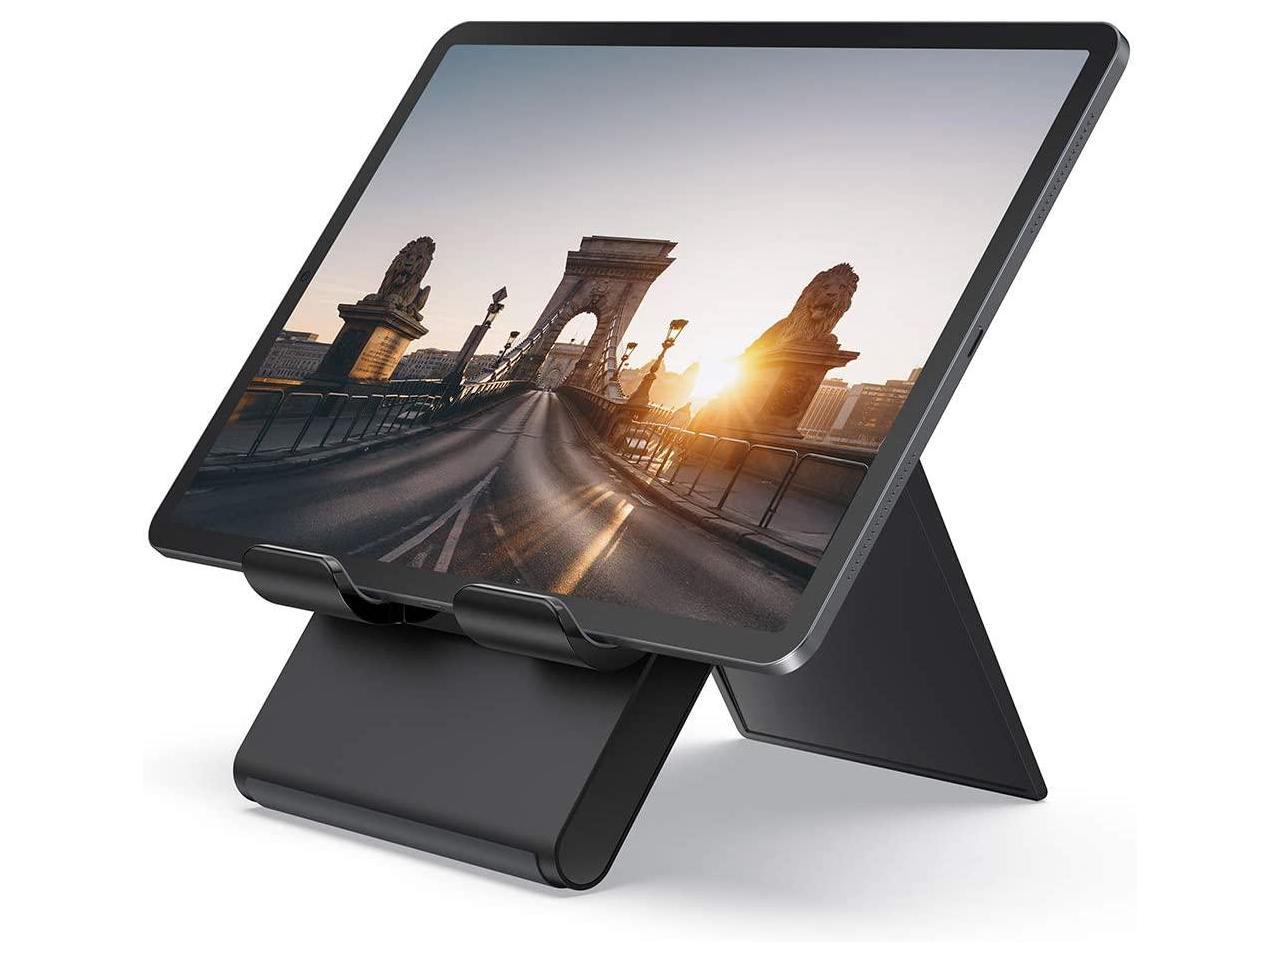 Monitor with Stand Tablet Newest 2022 Light, Hol Stand Desktop Adjustable  スリッパラック、スタンド 【日本製】 - www.ecofactory.com.ar